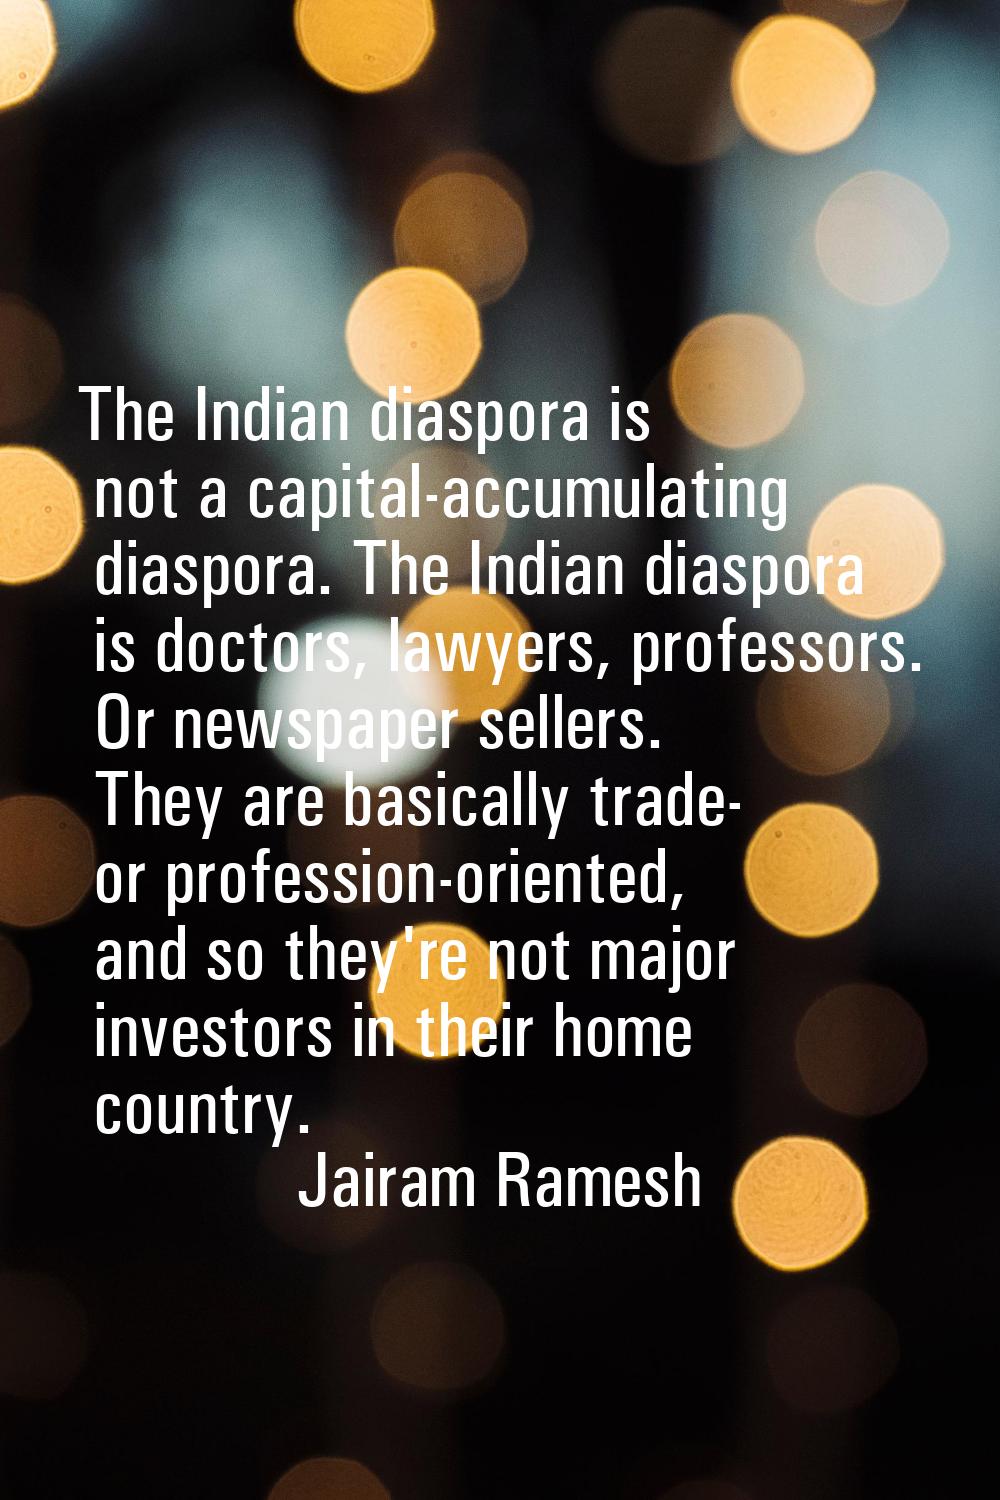 The Indian diaspora is not a capital-accumulating diaspora. The Indian diaspora is doctors, lawyers